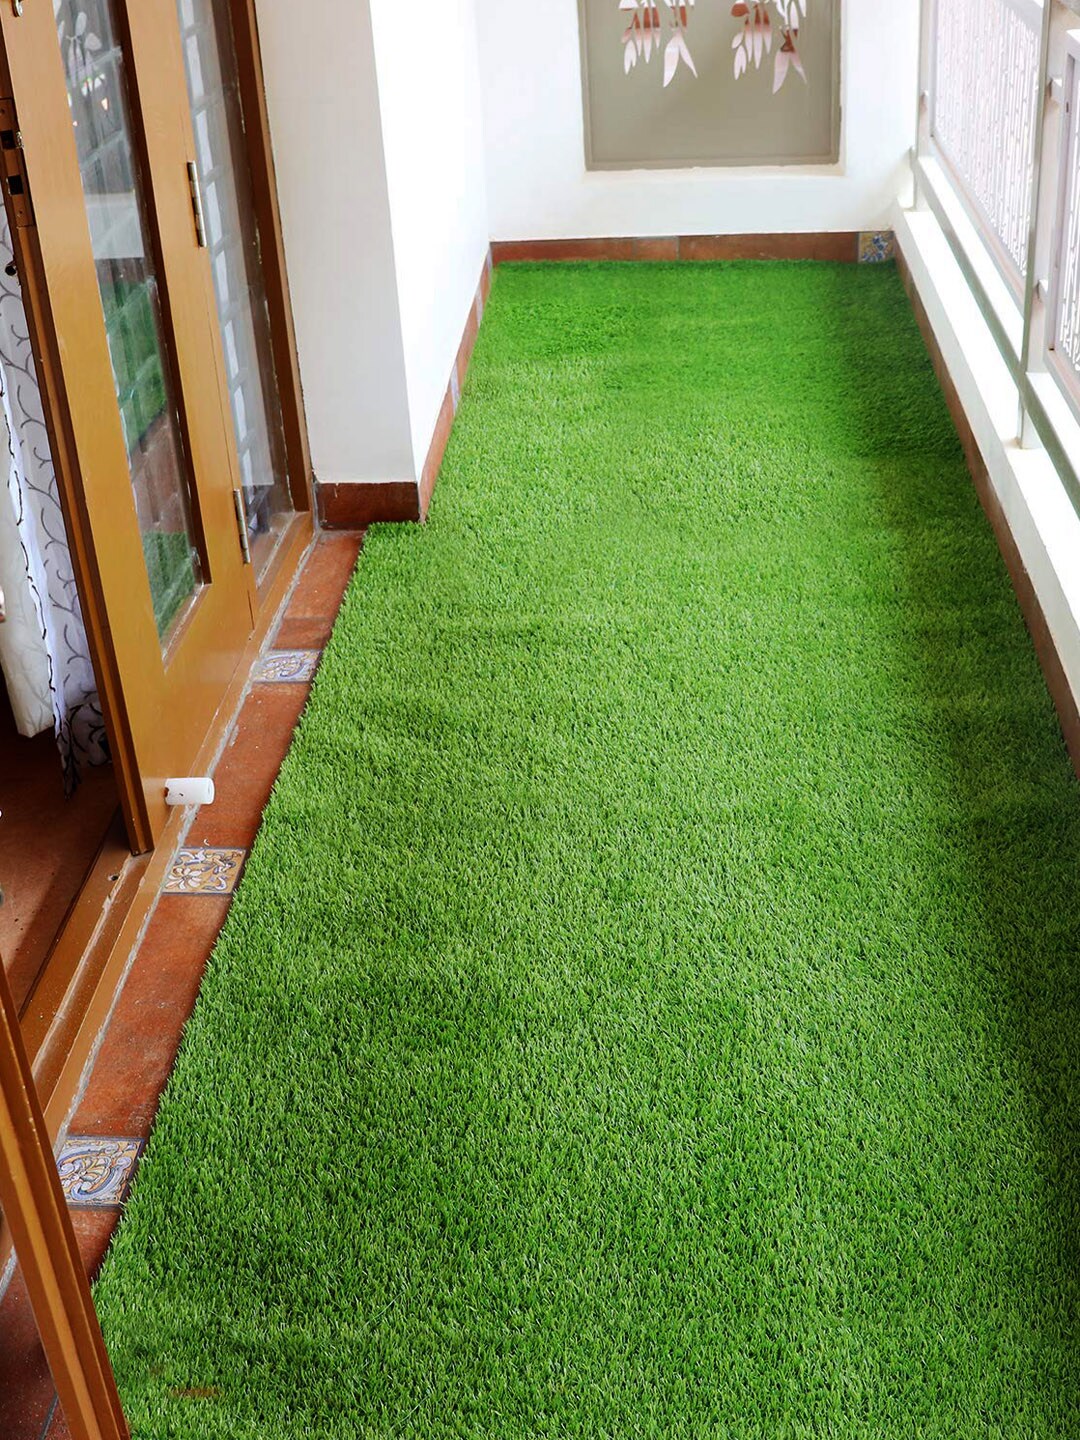 Kuber Industries Green High Density 35 mm Artificial Grass Carpet Mat Price in India